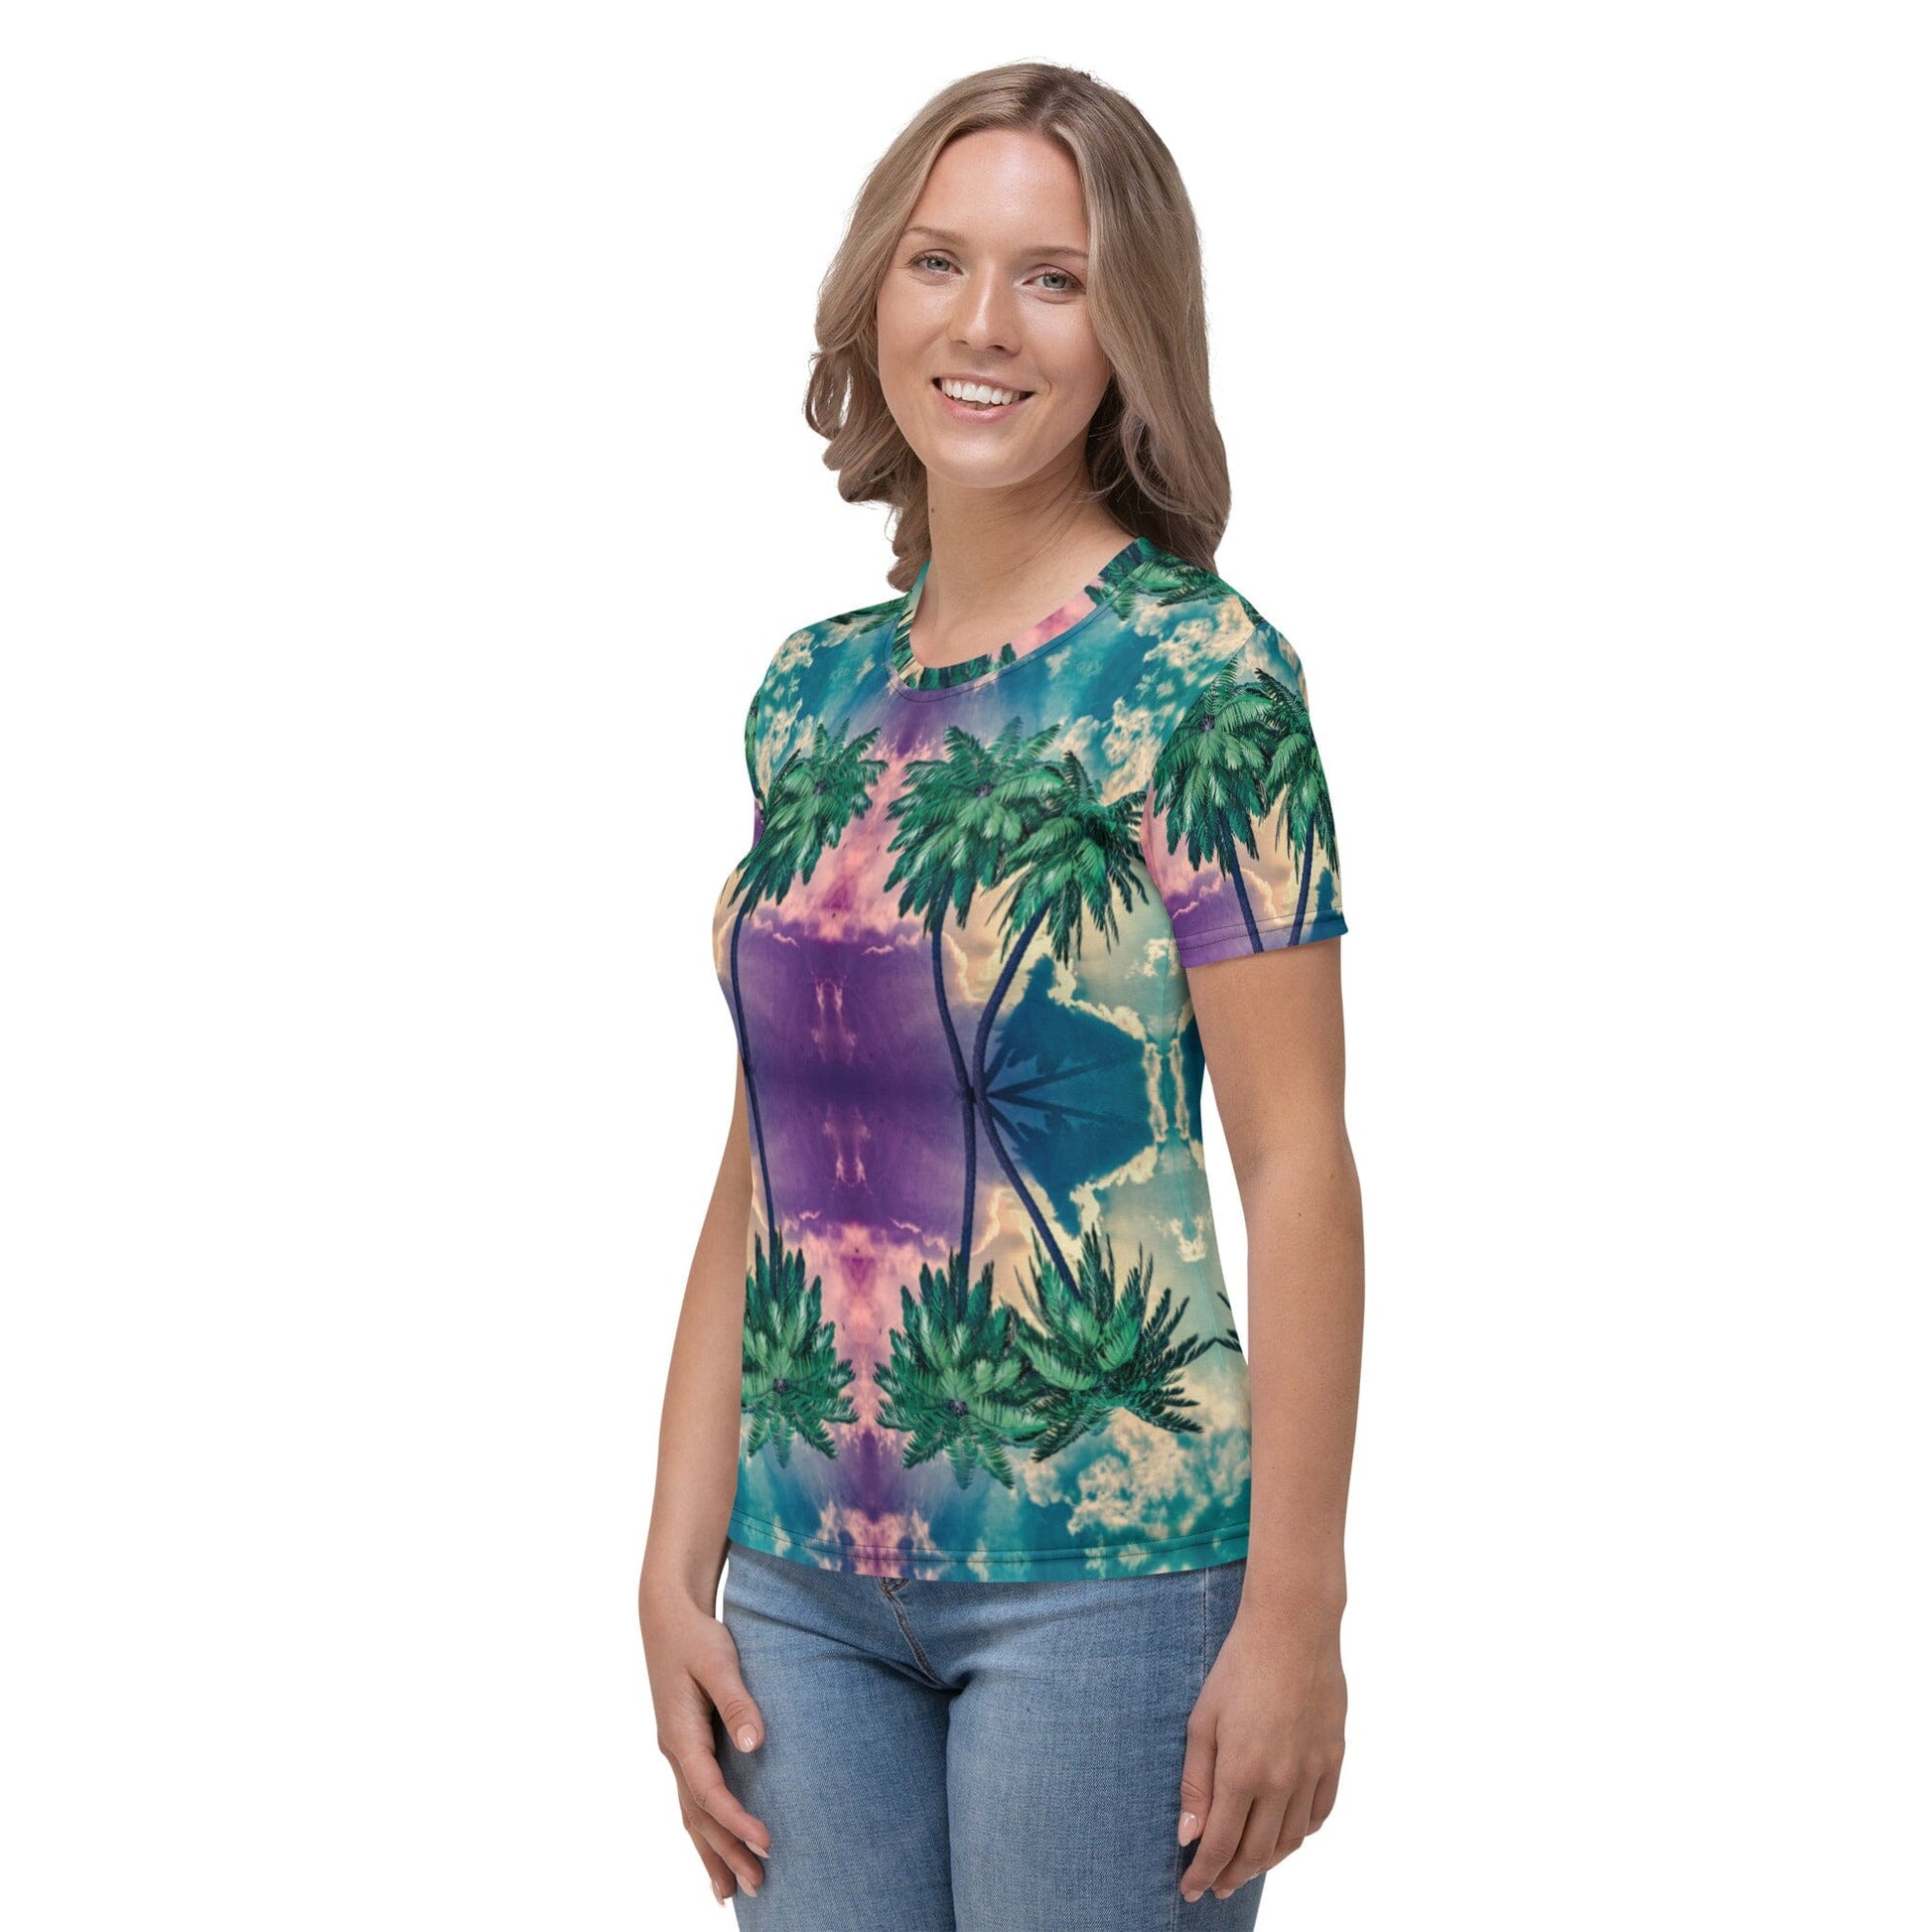 Islands in the Sky Women's T-Shirt PLURTHLINGS 